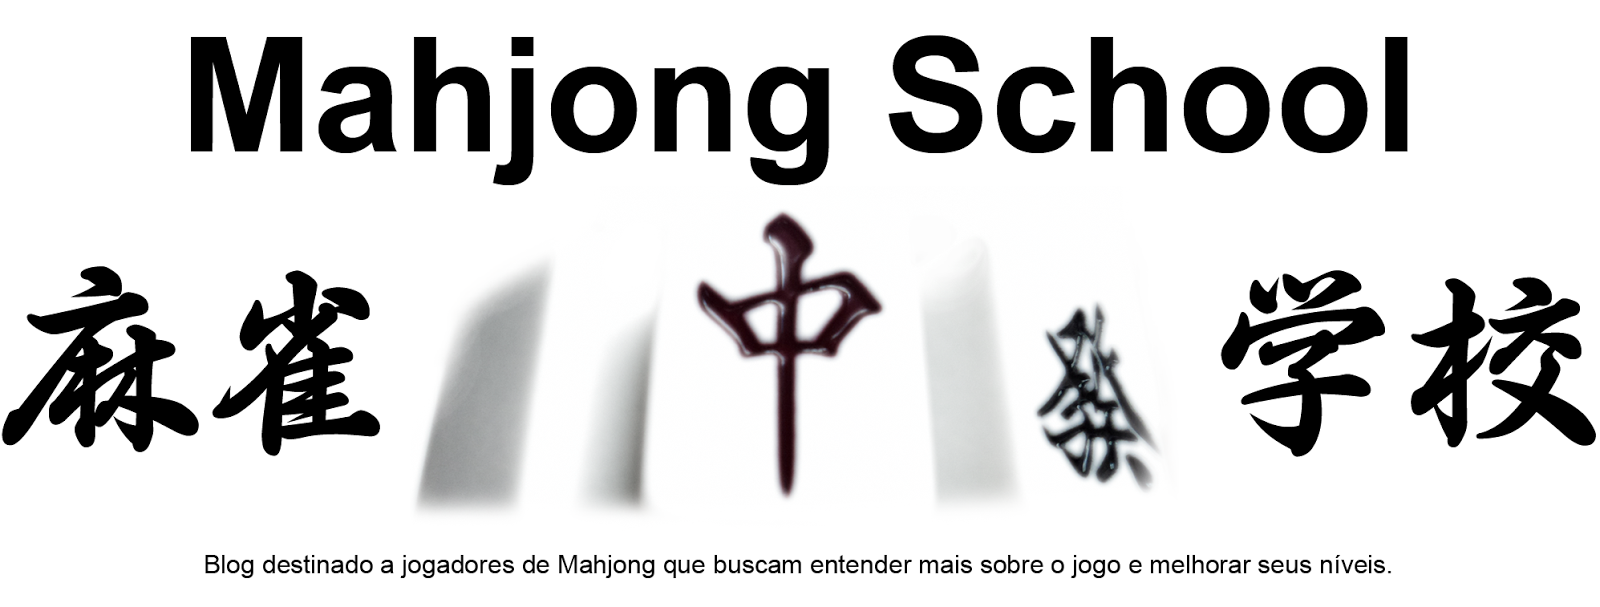 Mahjong School